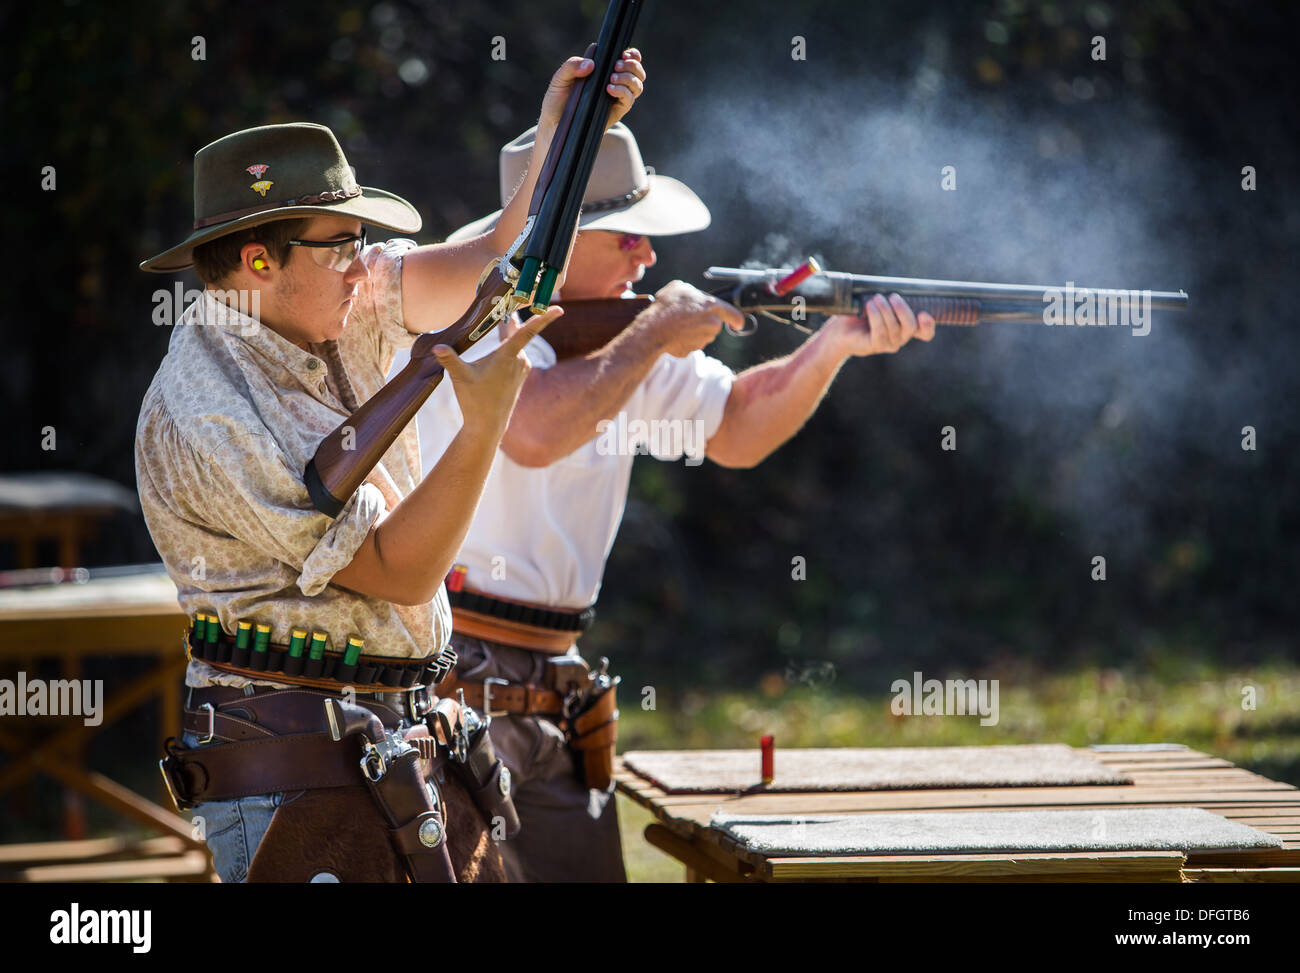 Single action gun competition. Stock Photo